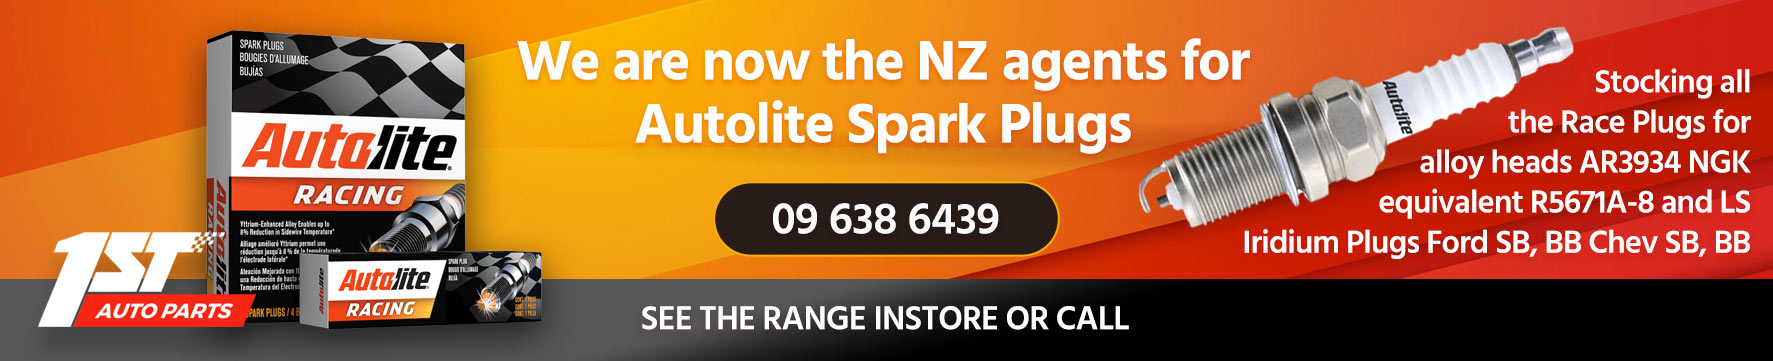 NZ agents for Autolite Spark Plugs